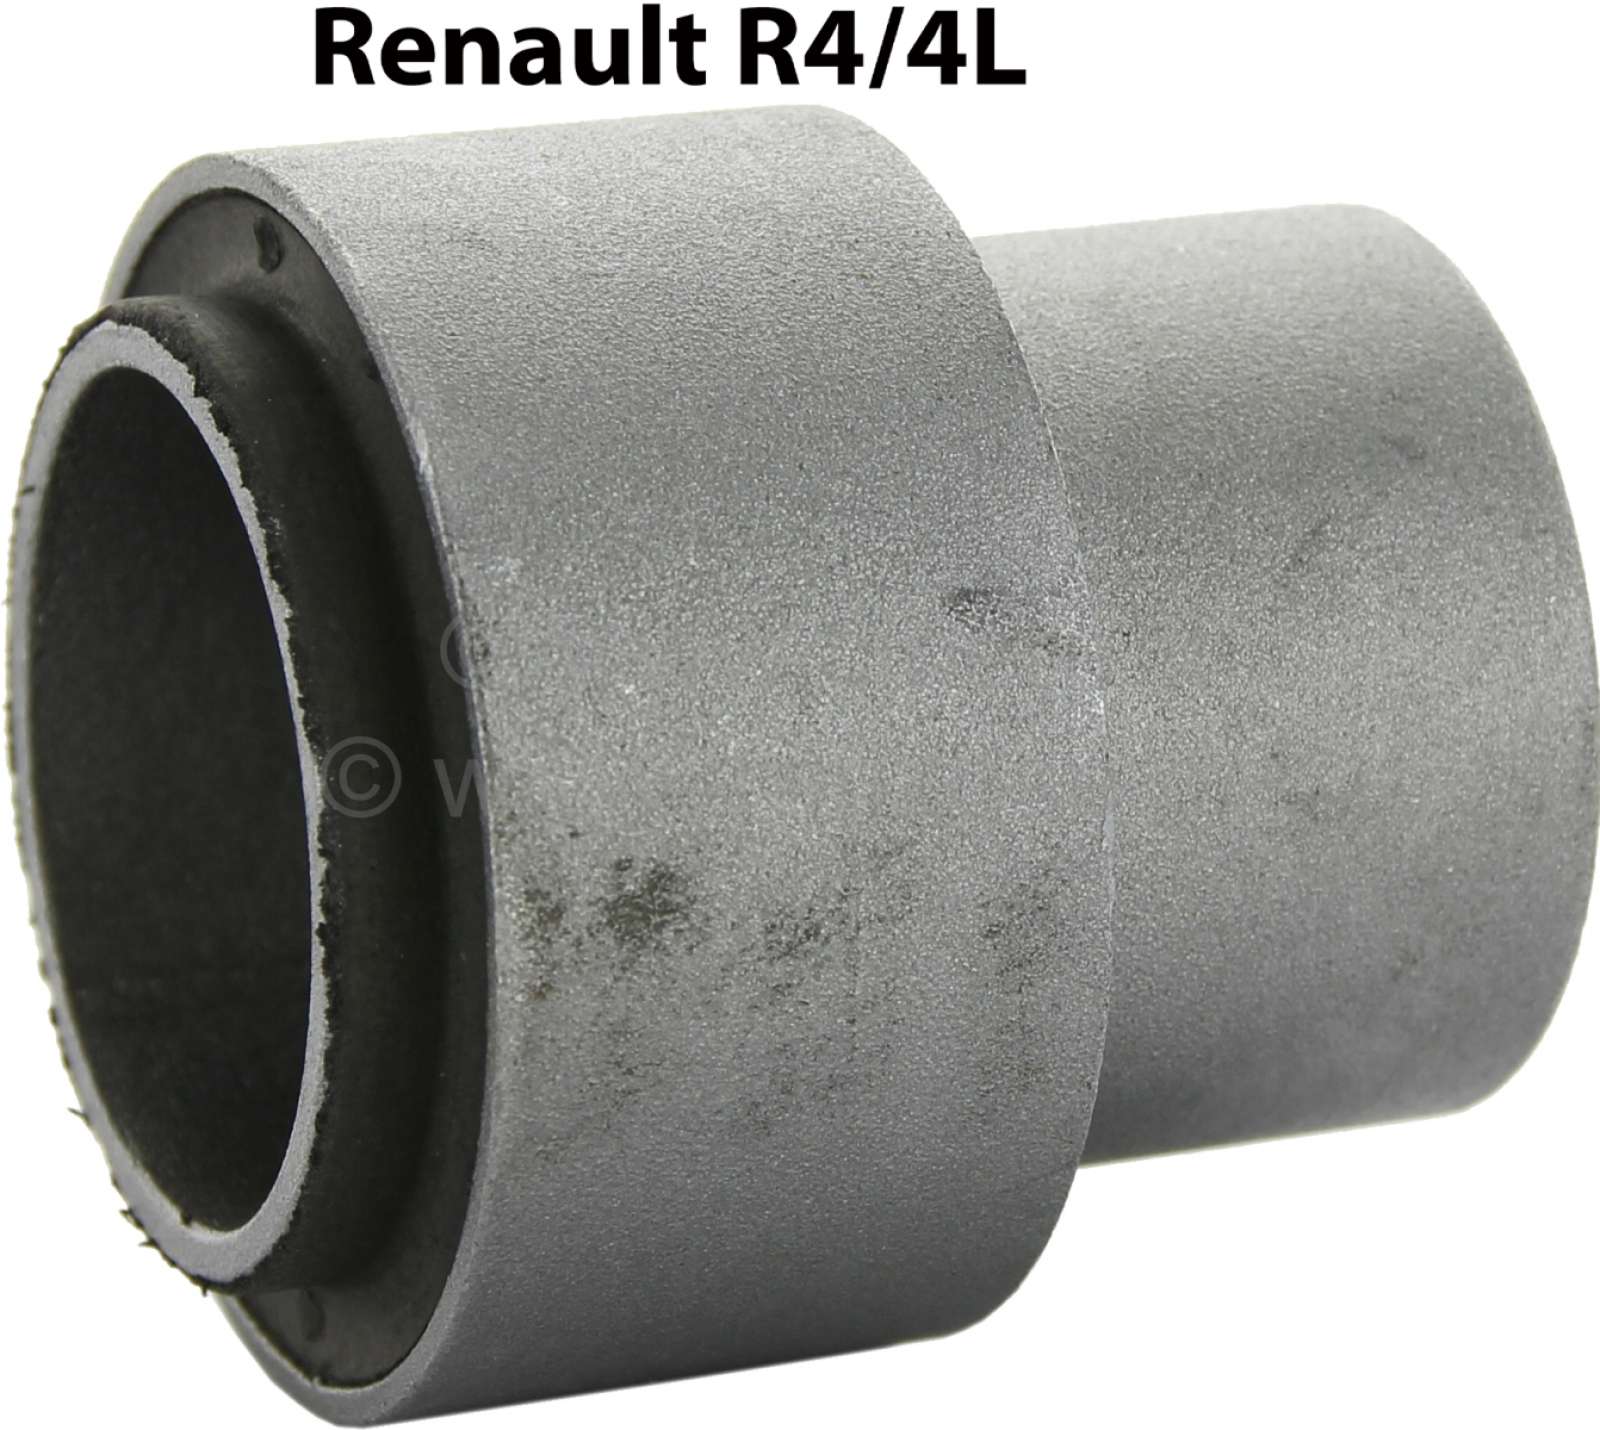 renault-rear-axle-r4r5-bonded-rubber-bushing-piece-P83035.jpg